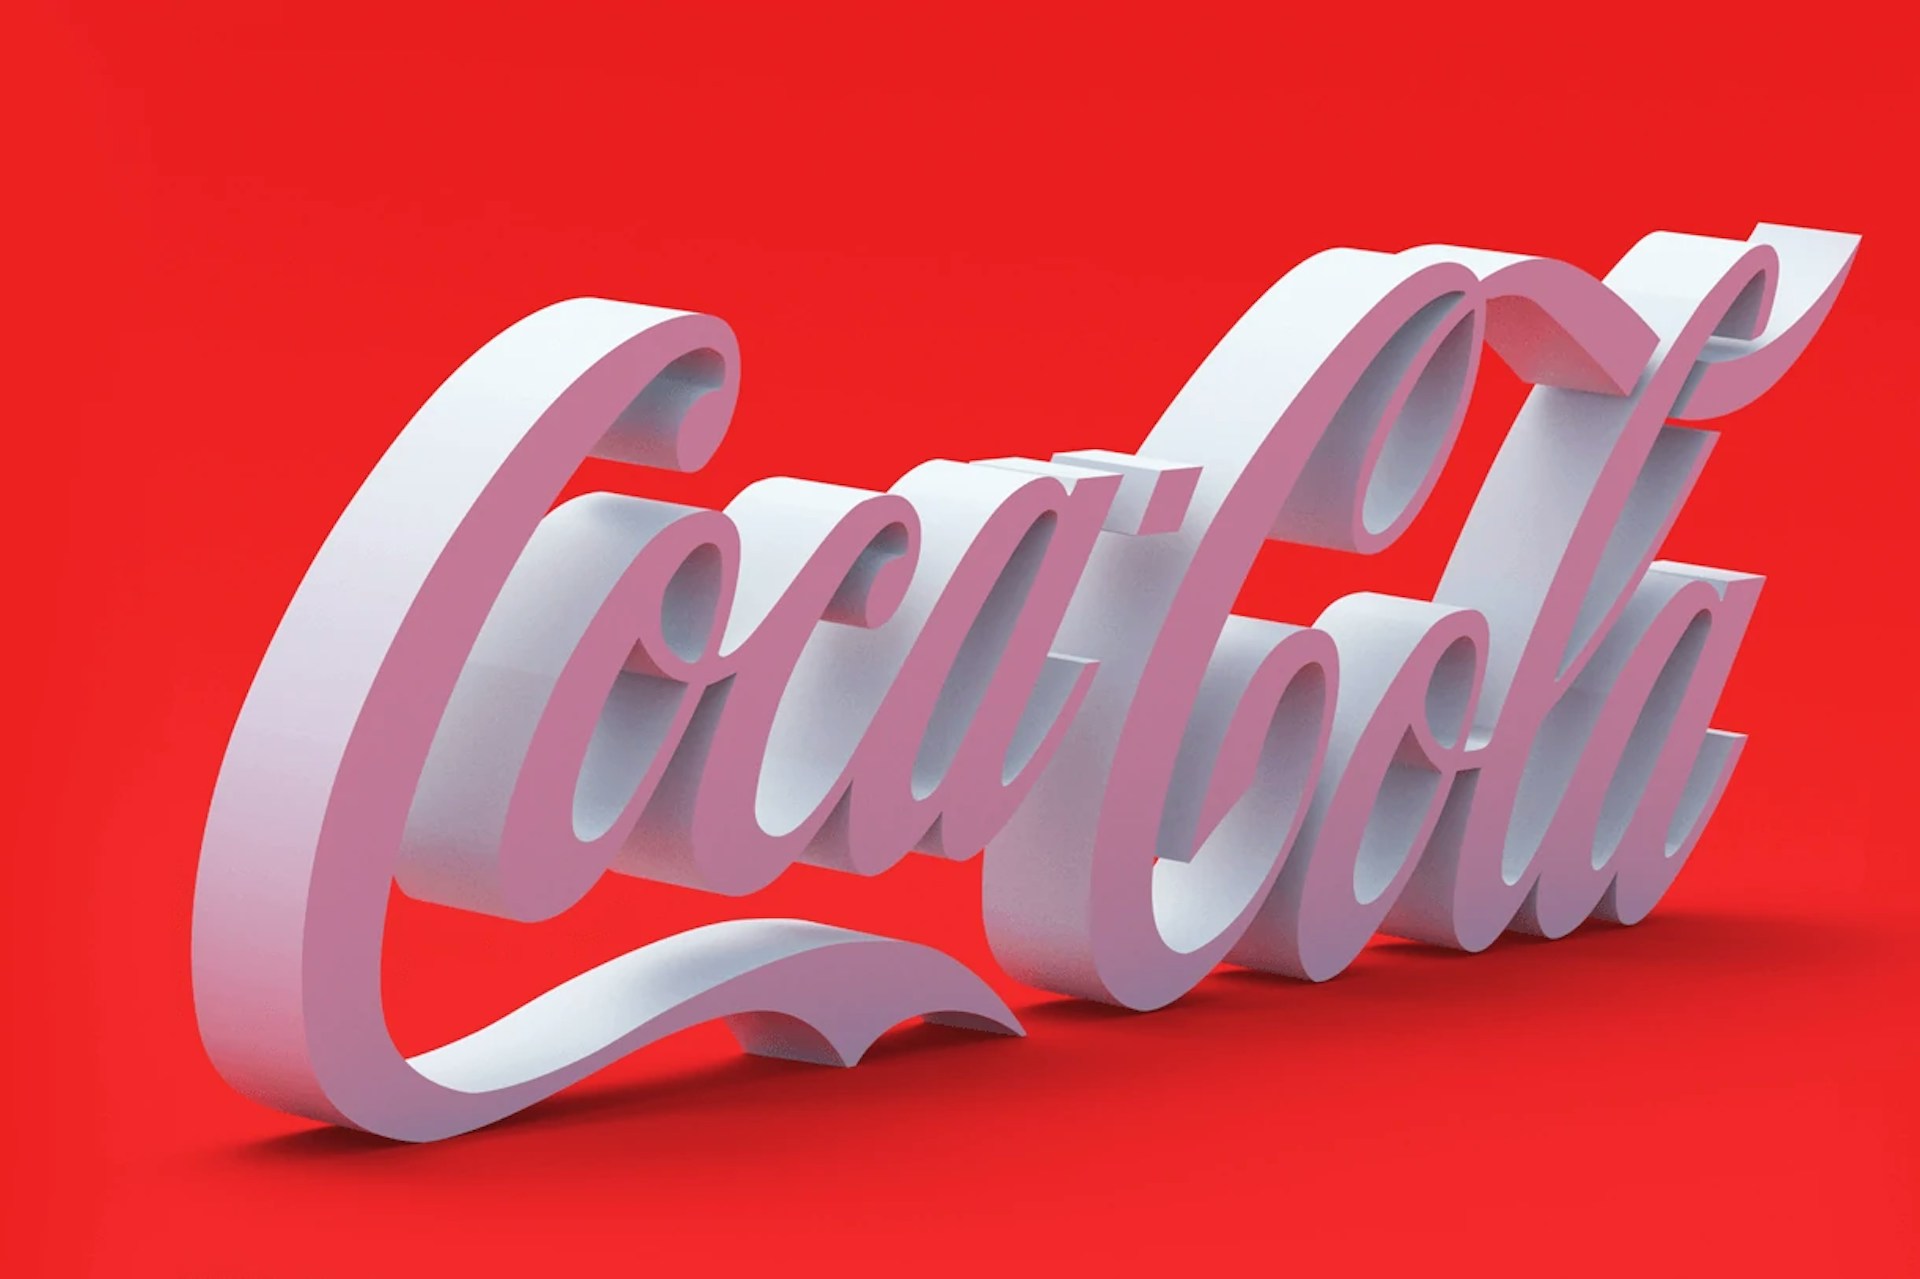 Coca Cola logo 3D illustration